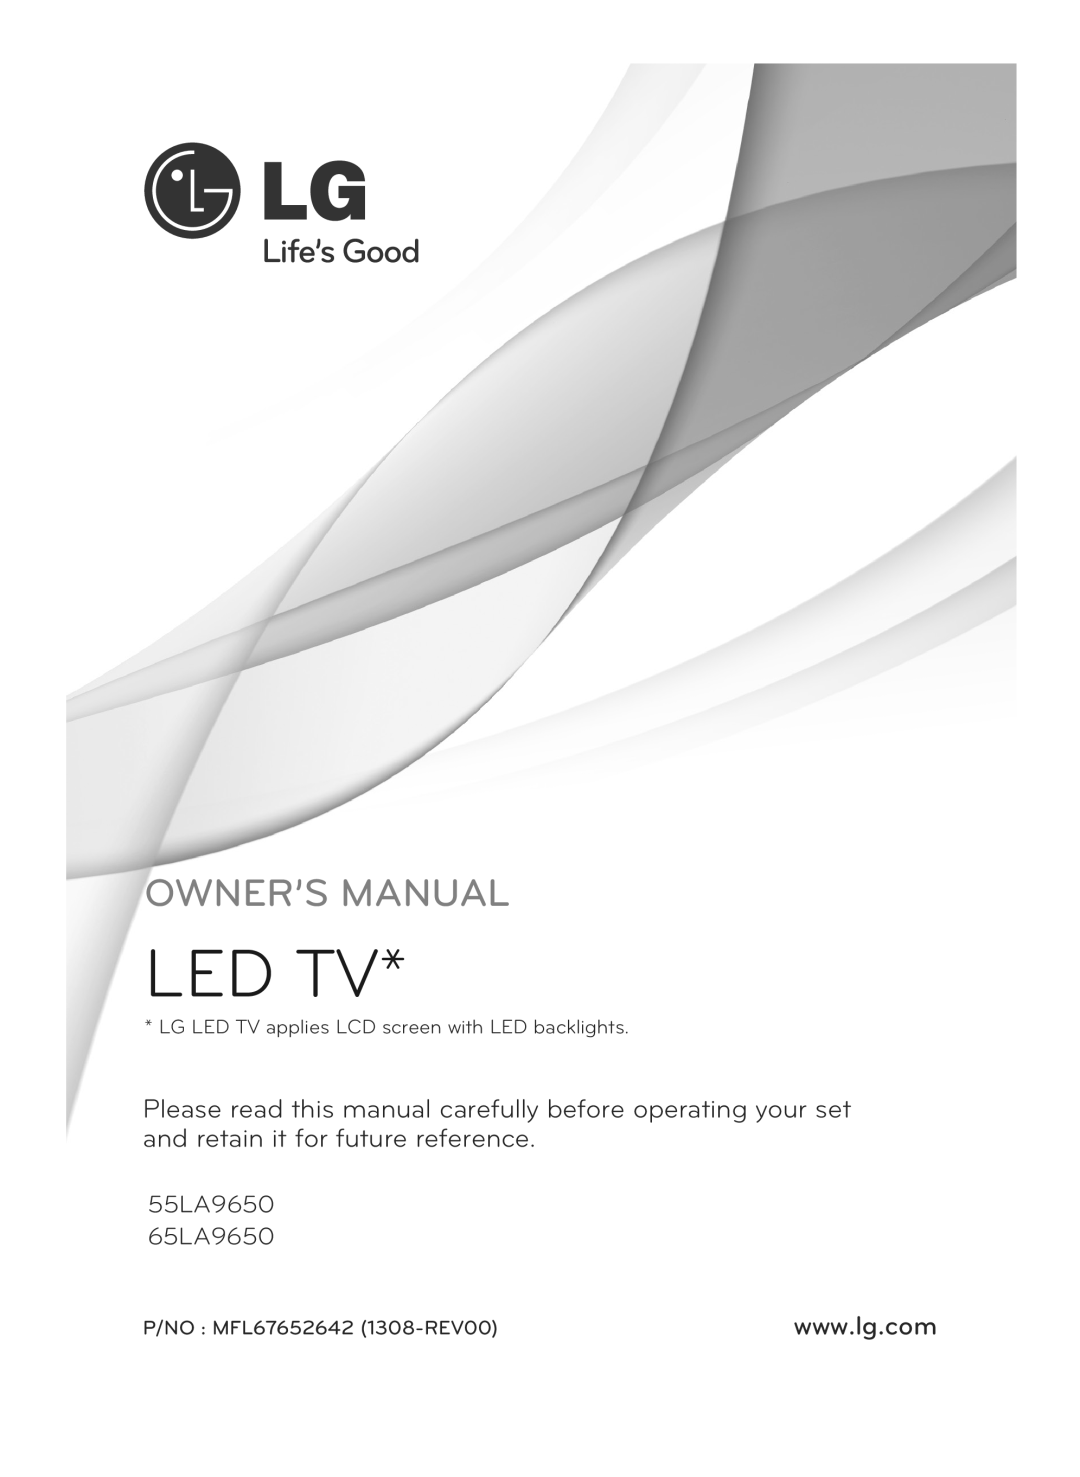 LG Electronics owner manual Owner’S Manual, Led Tv, 55LA9650 65LA9650, LG LED TV applies LCD screen with LED backlights 